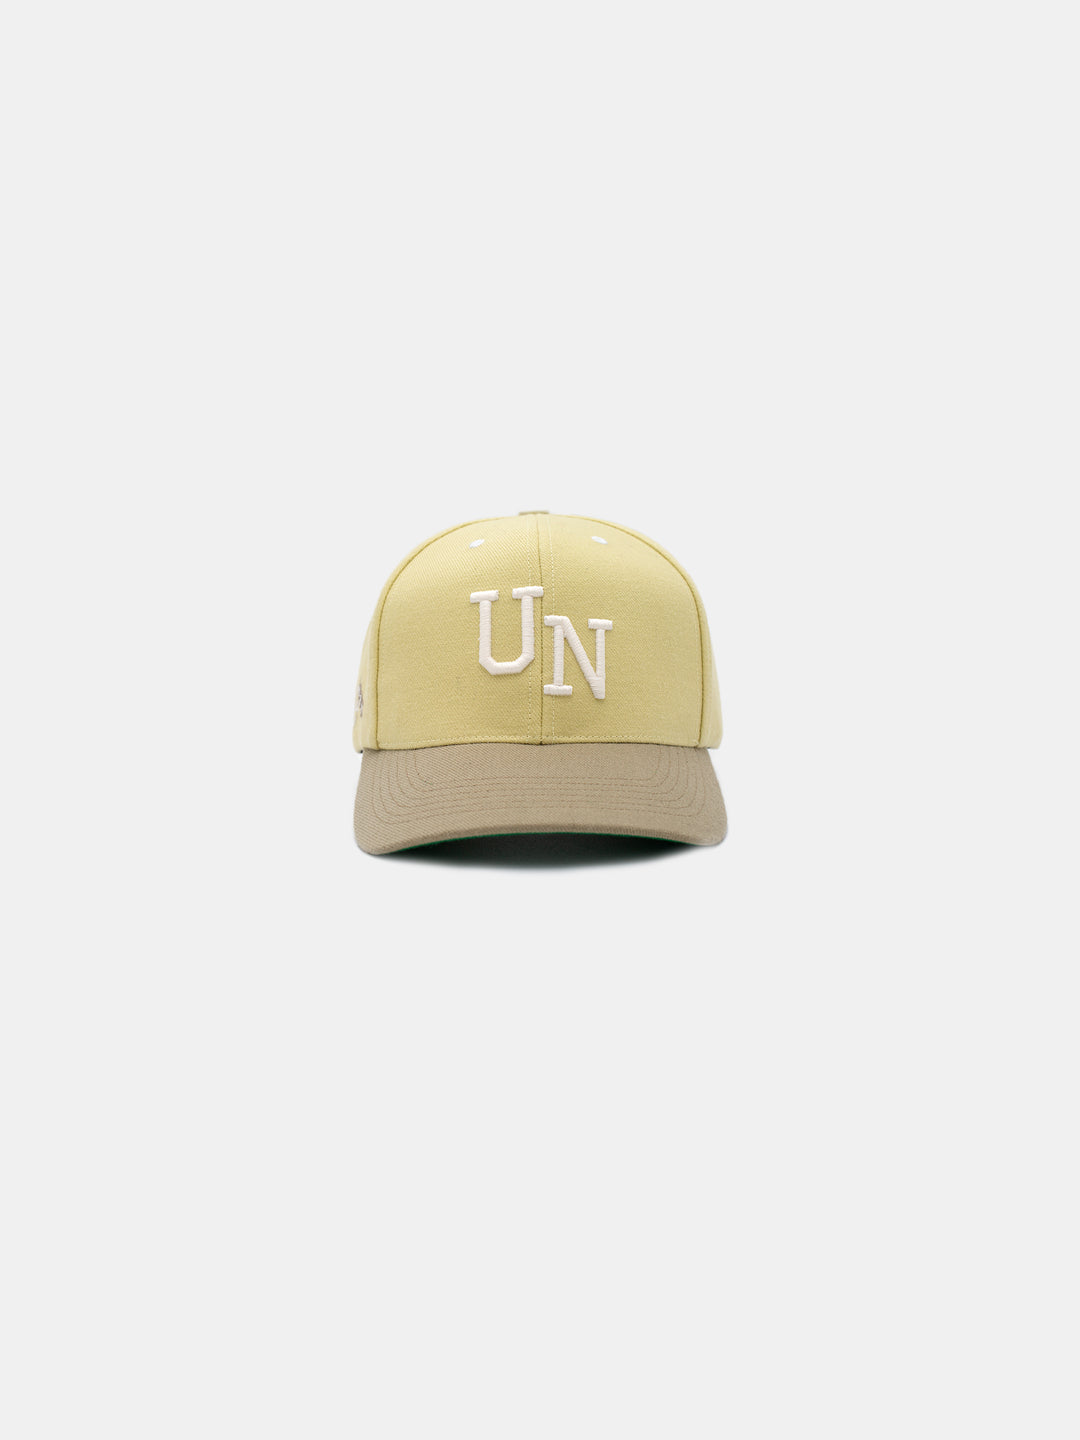 front of Chosen UN Snapback Hat Mustard Yellow